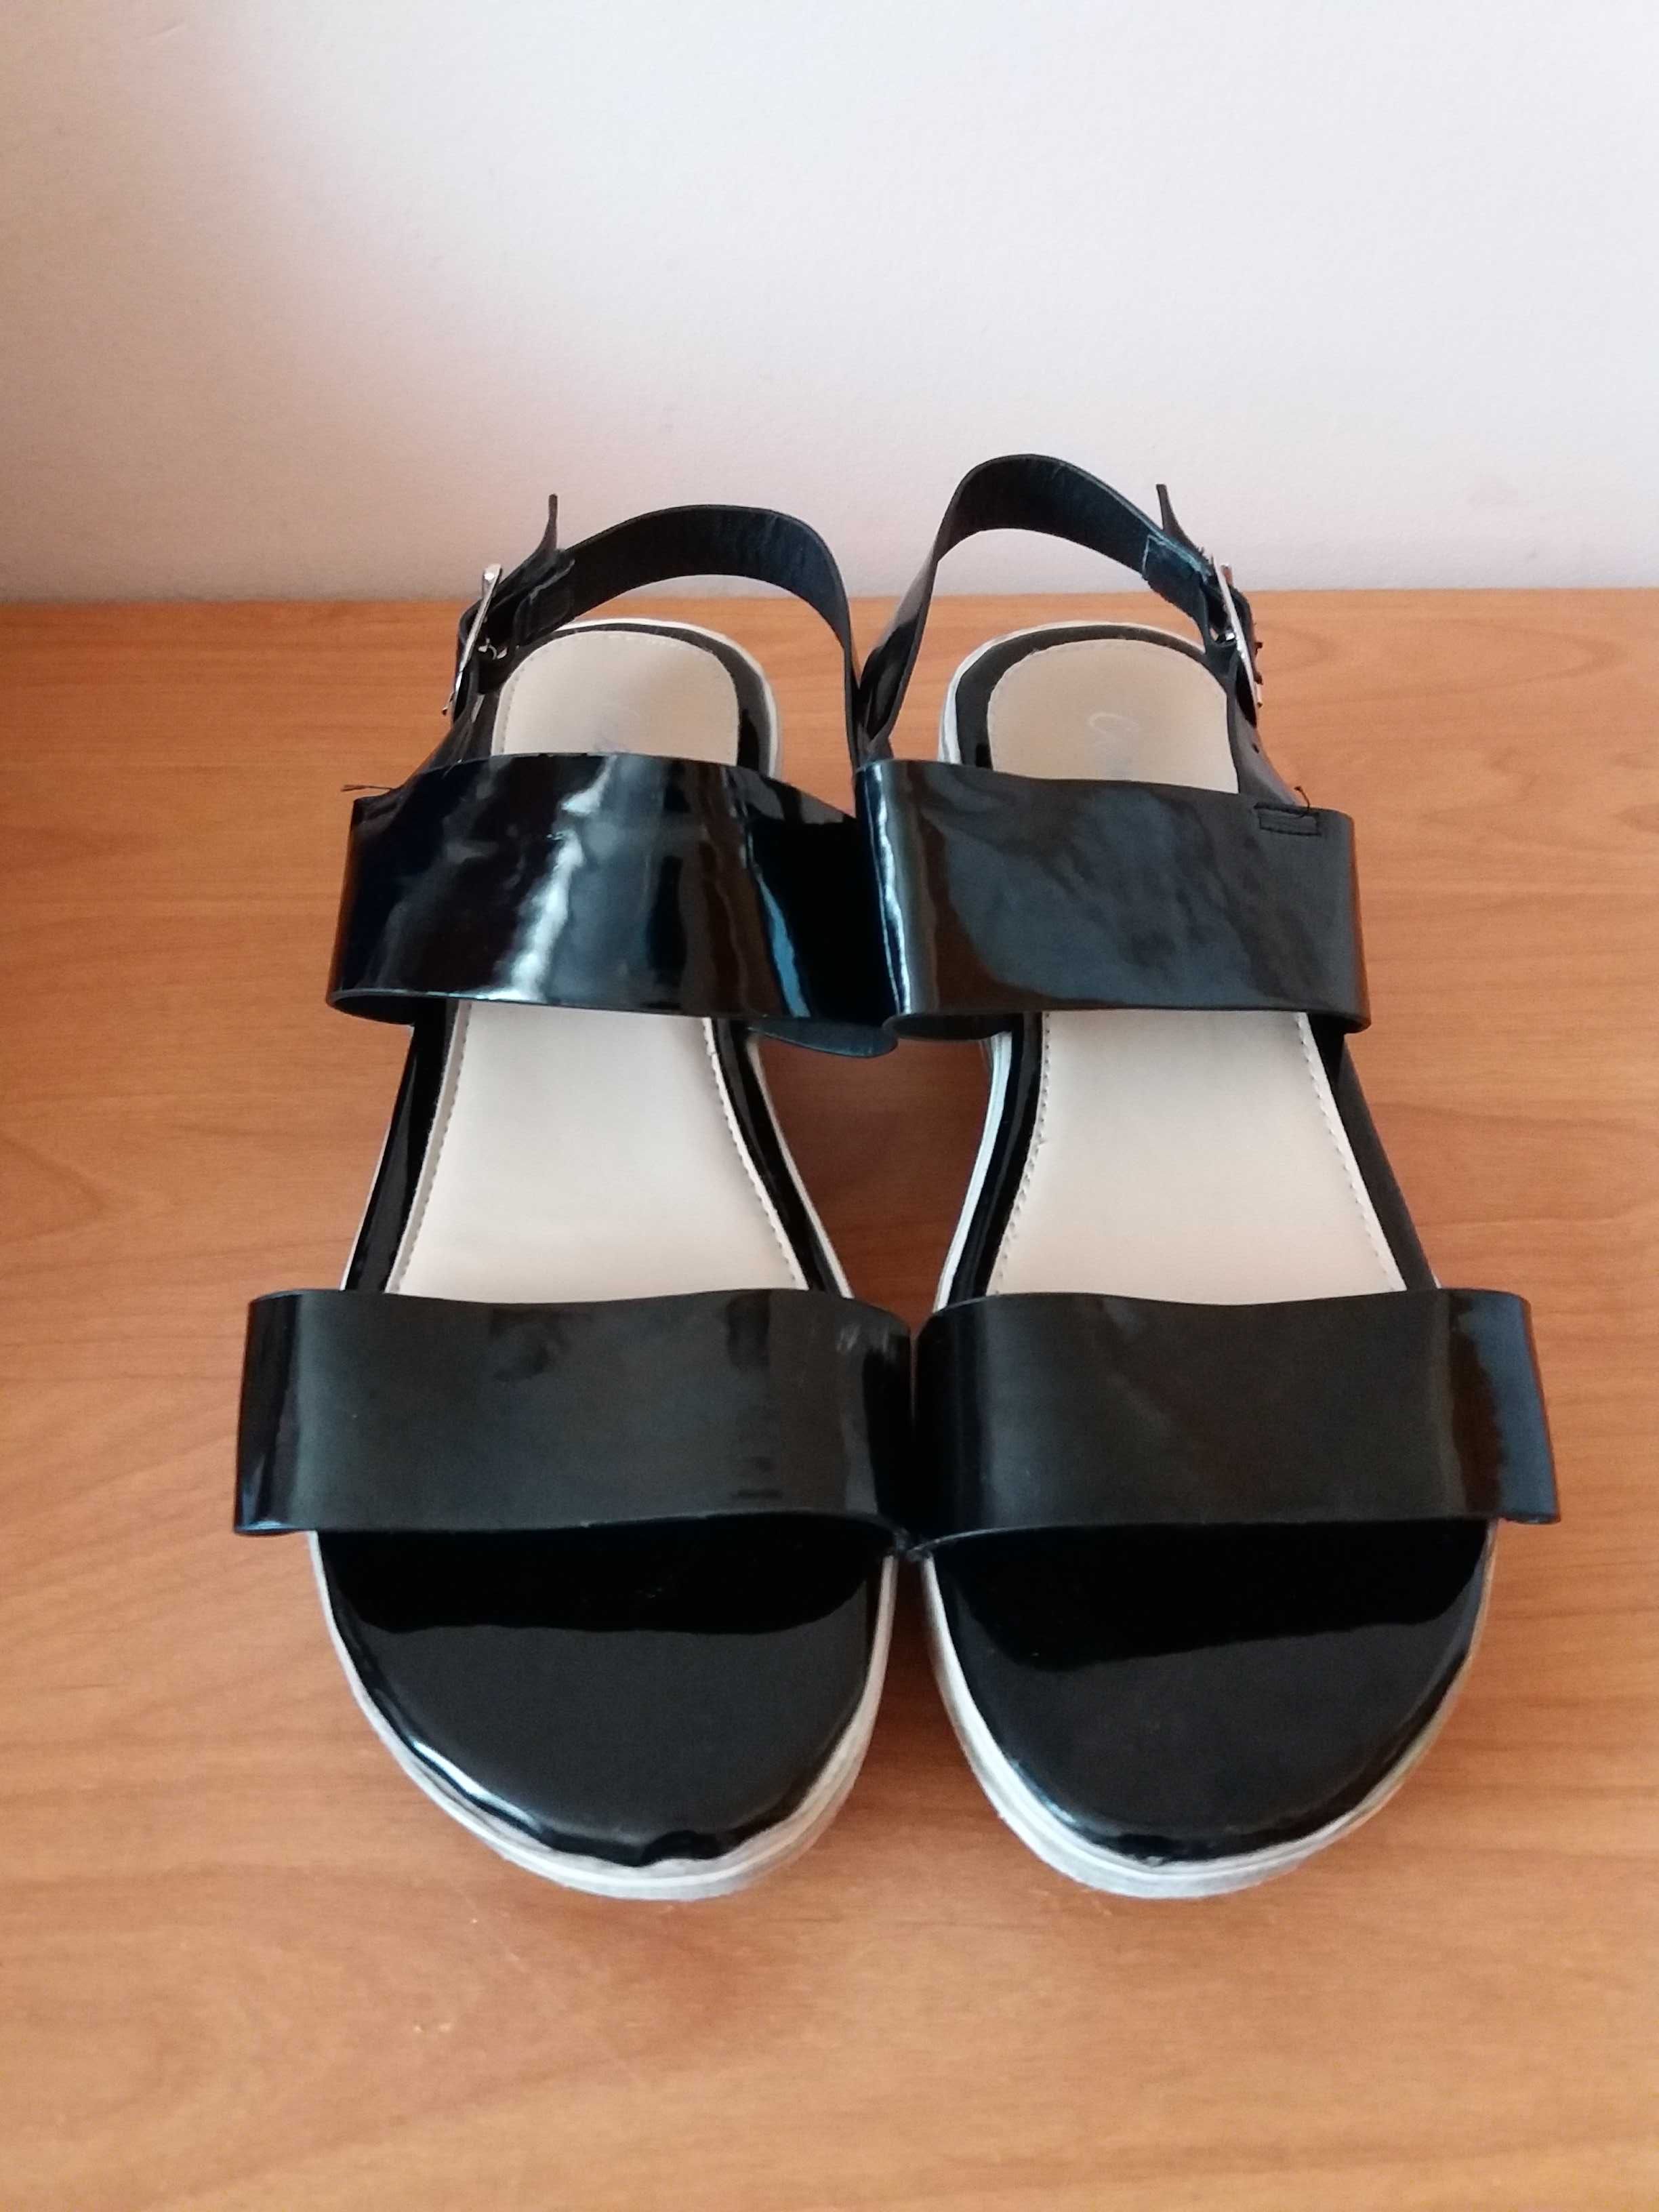 Czarne sandały 39 koturn 5cm lakierowane wkładka 25cm